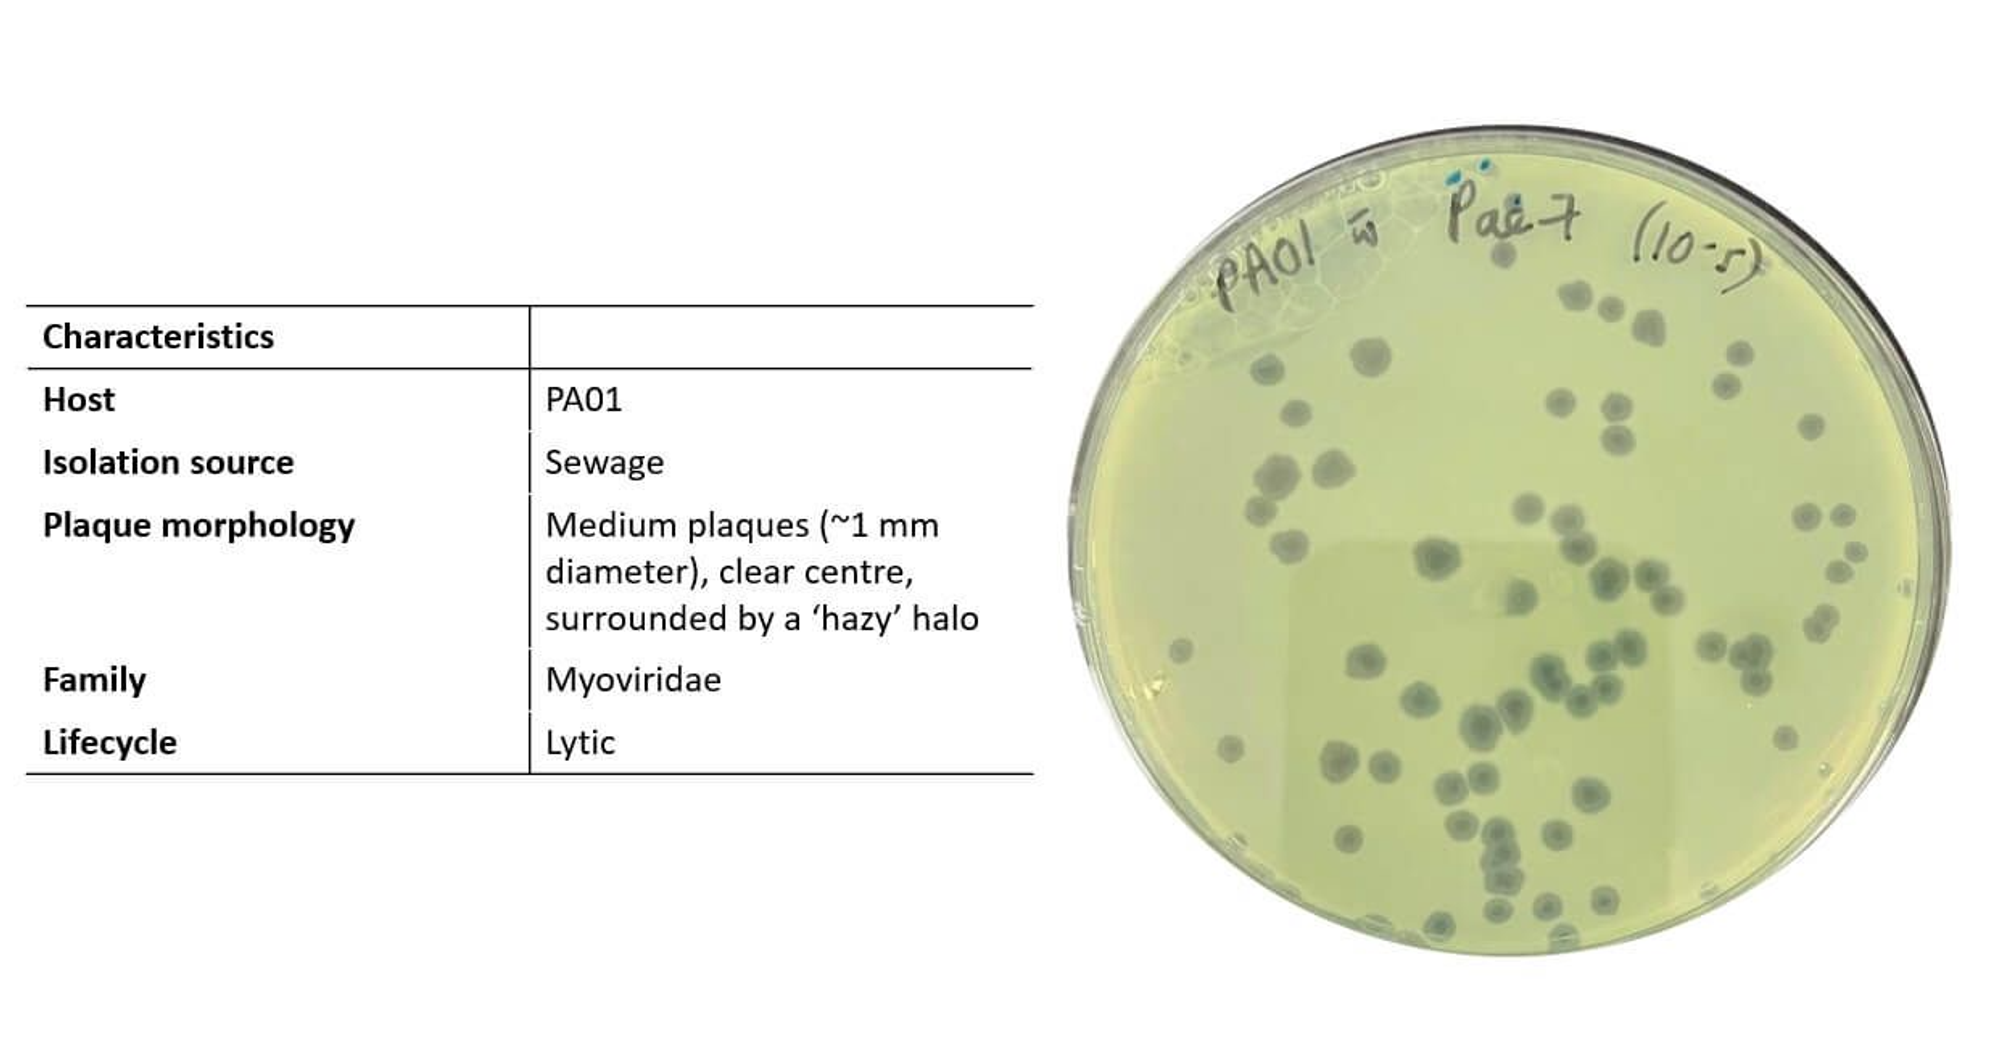 Figure 1. Characteristics and plaque morphology of Pseudomonas phage, Pae7.